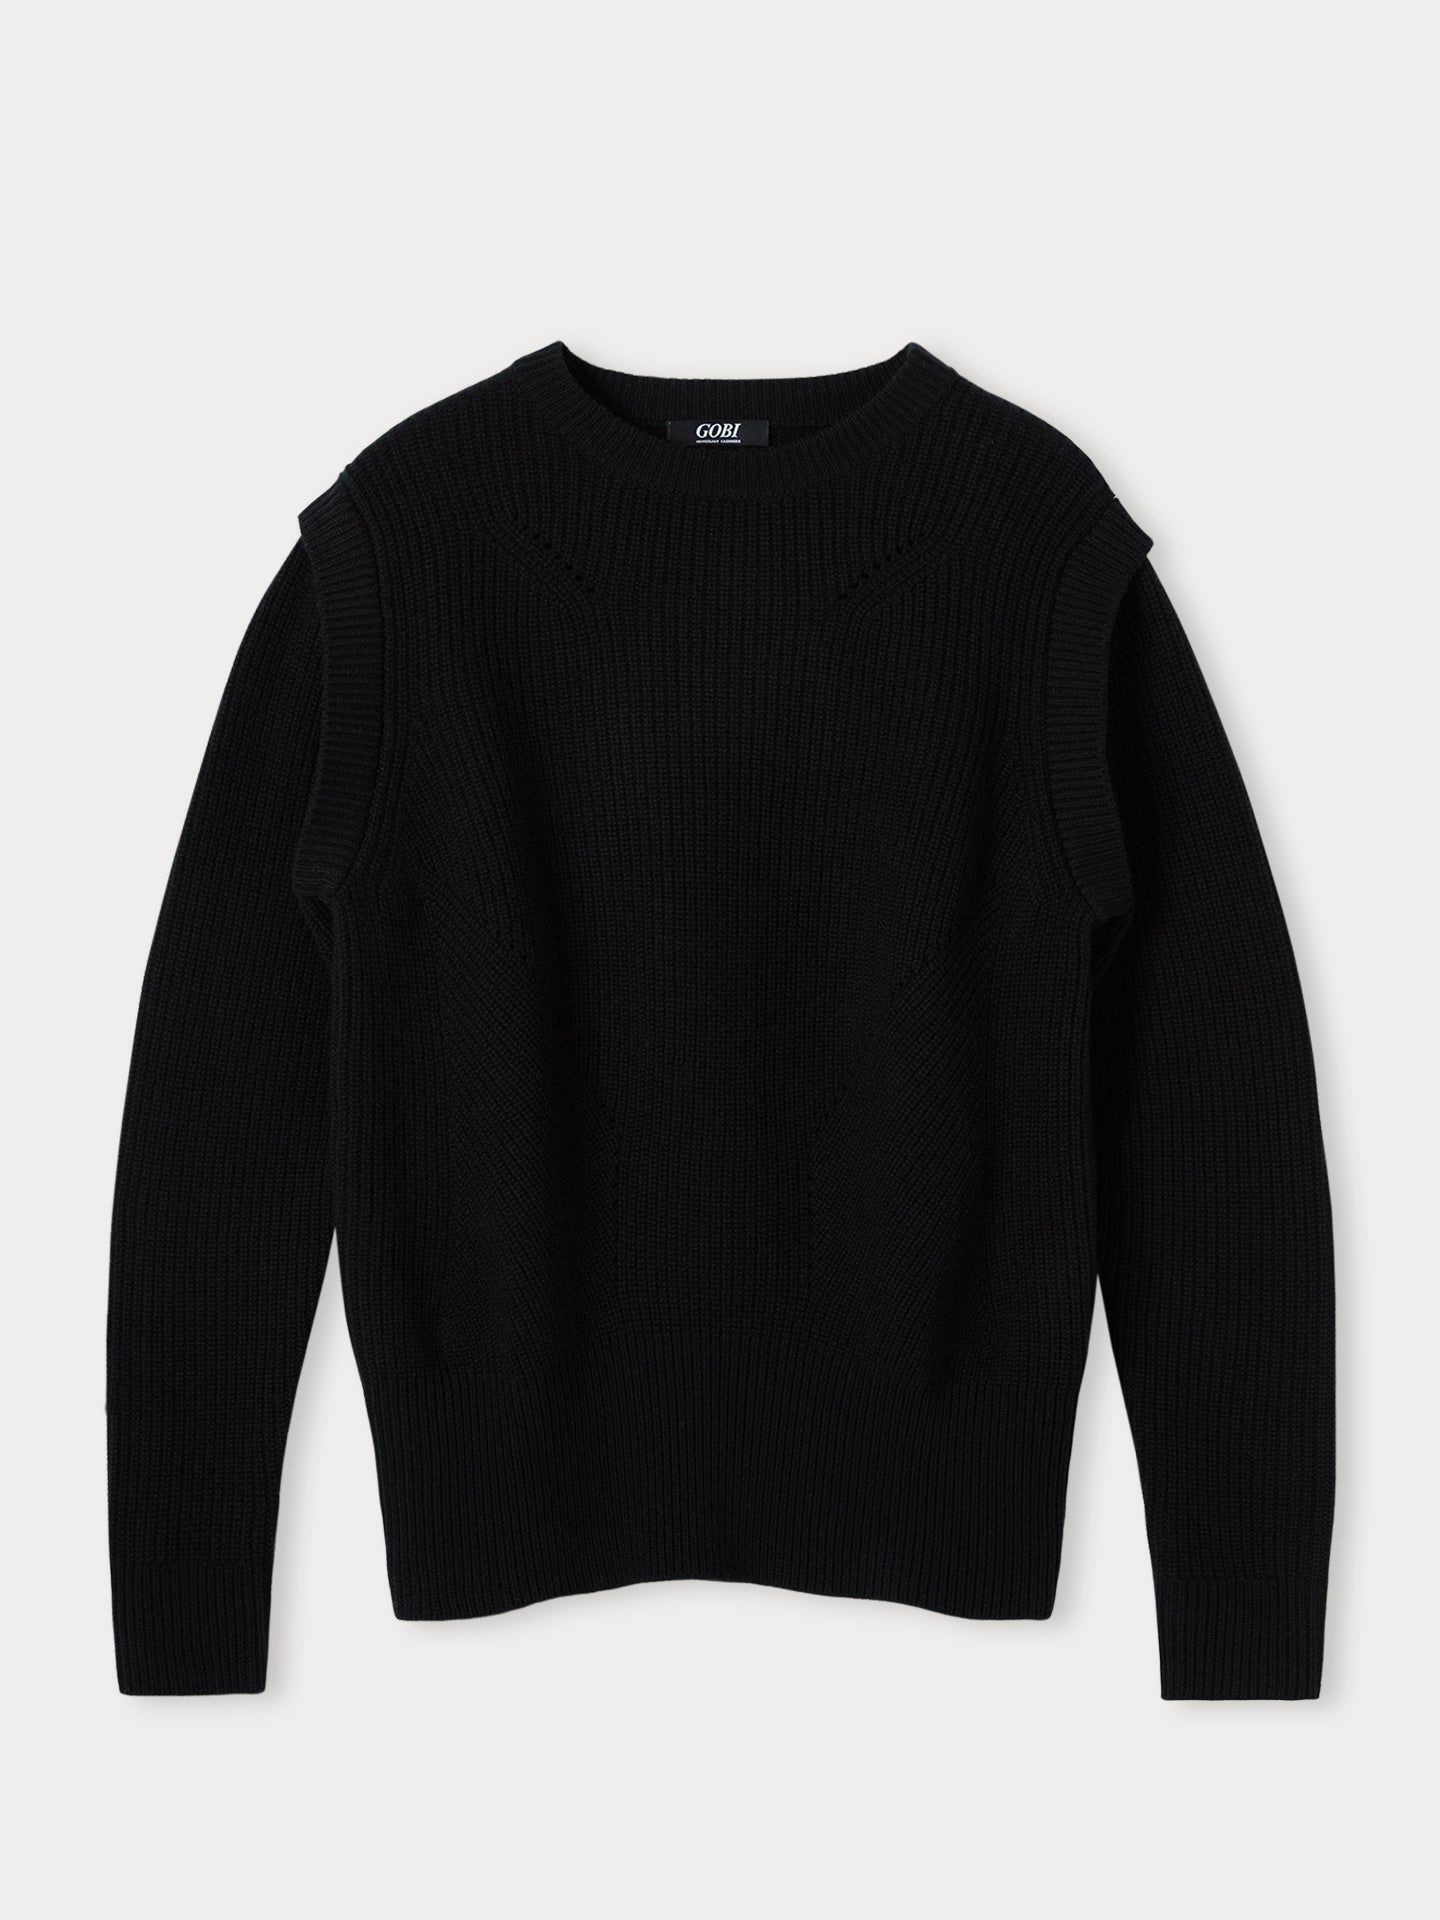 Women's Cashmere Layered Effect Sweater Black - Gobi Cashmere